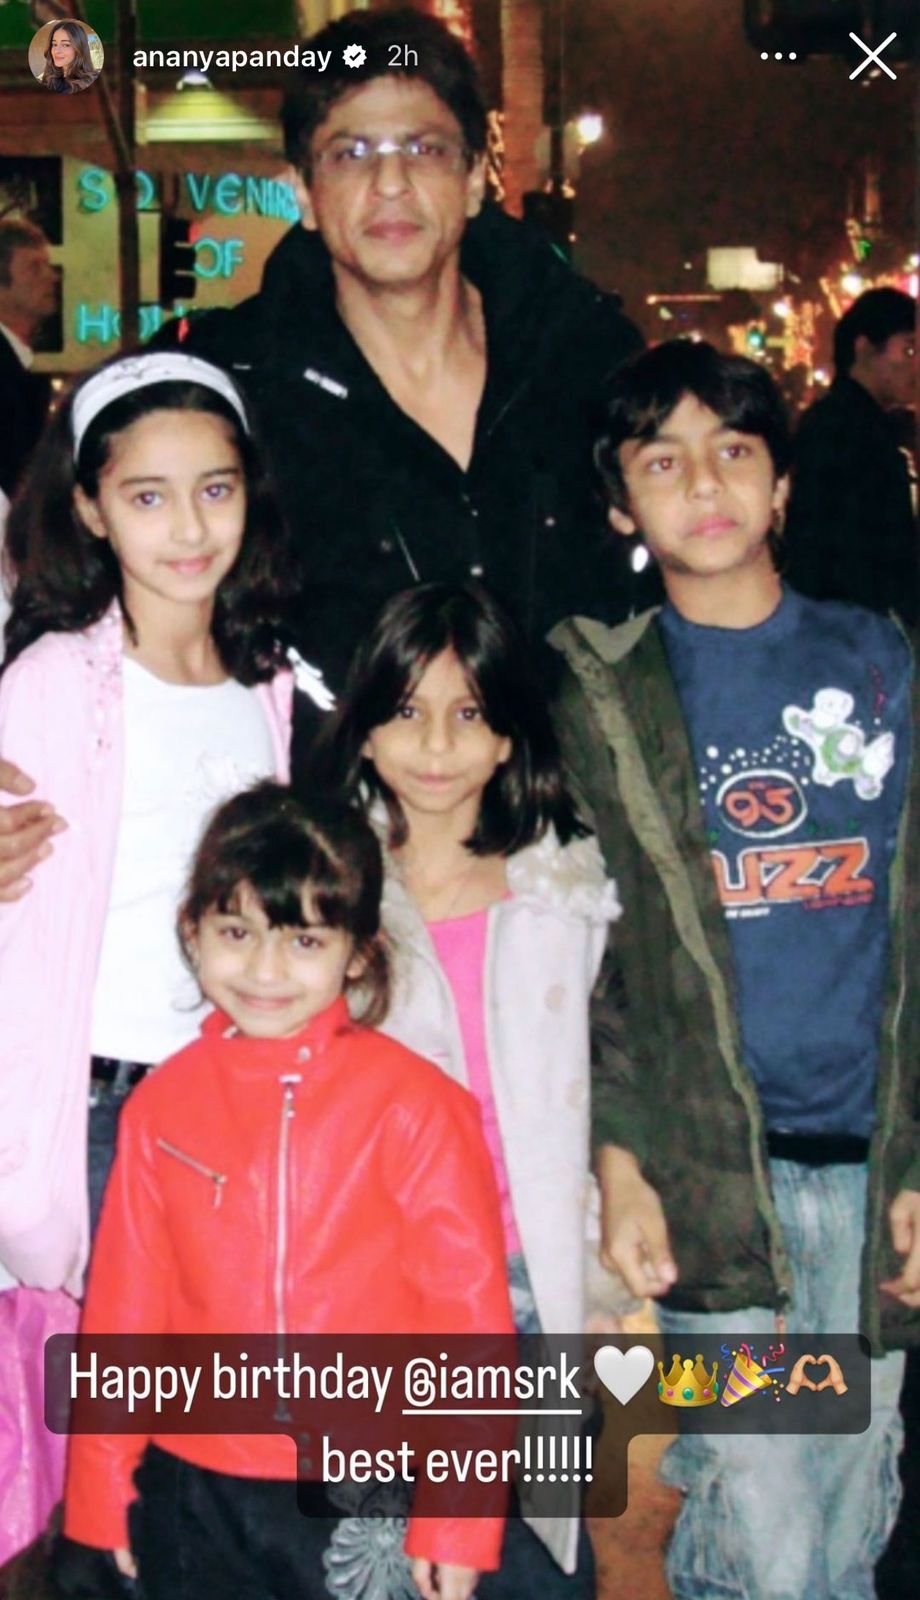 Ananya Panday's wish for Shah Rukh Khan.